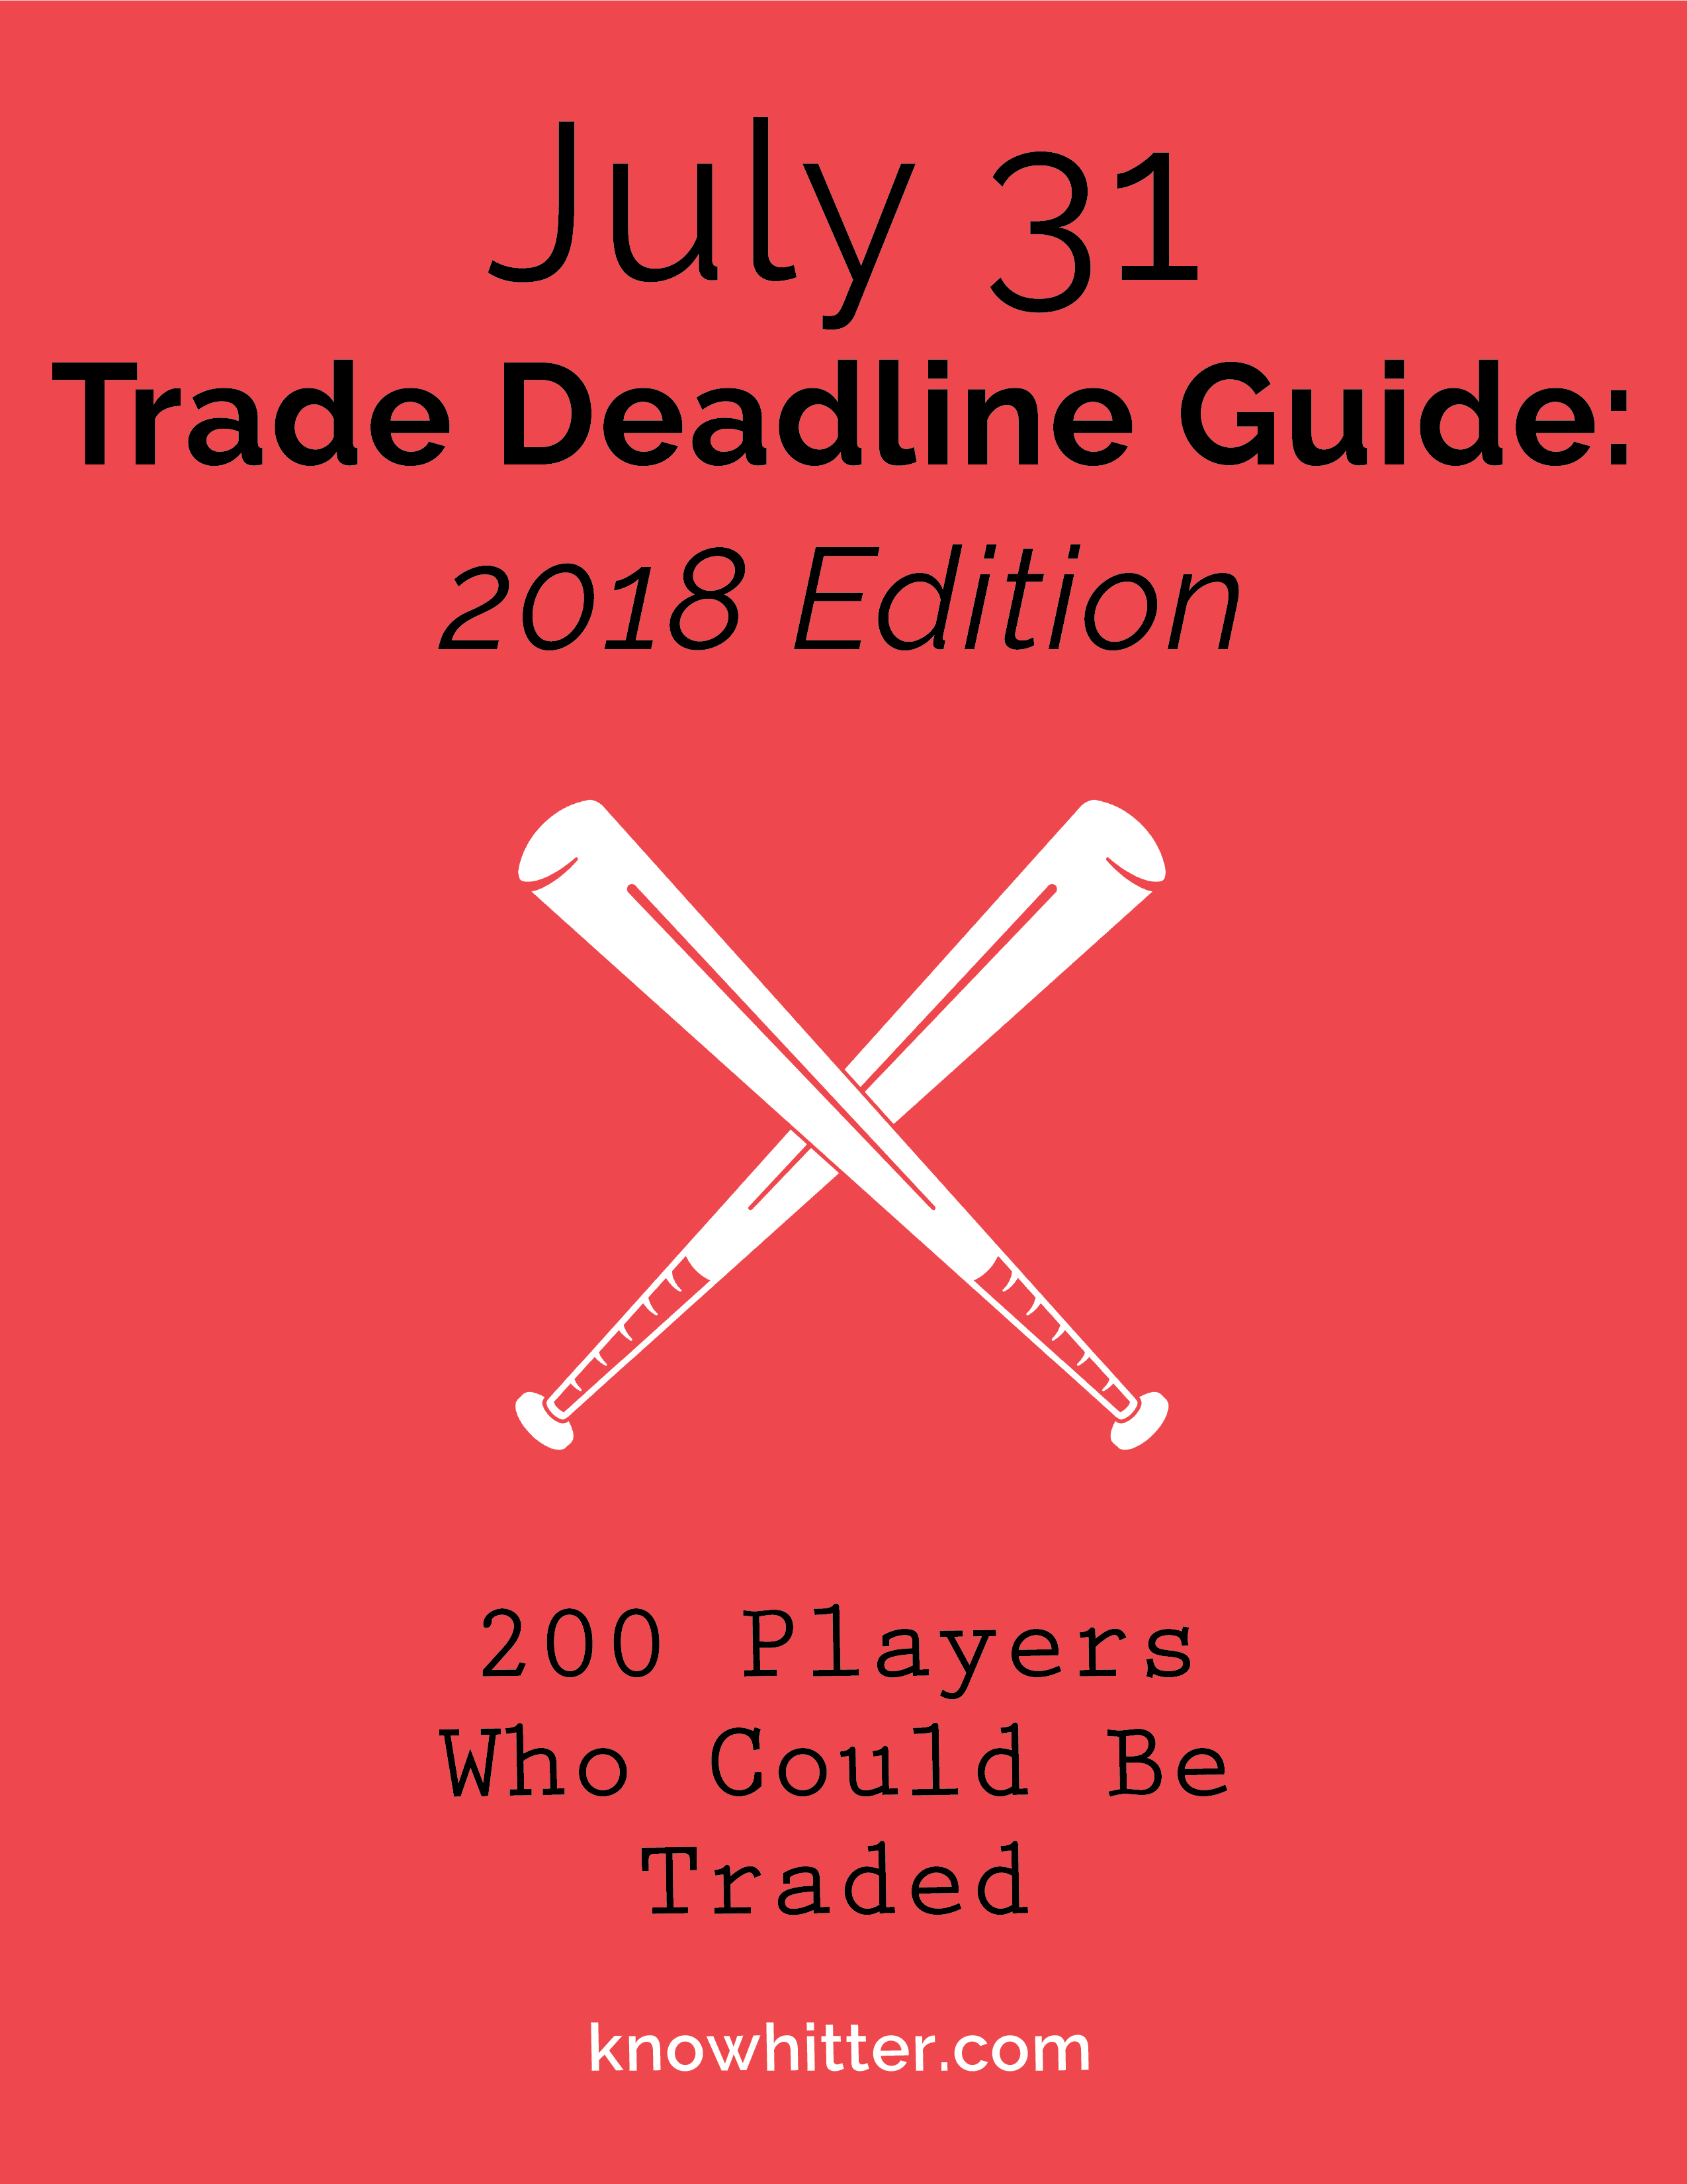 MLB, FREE, Detroit Tigers, Lite Version, Trade Guide, MLB Trade Deadline